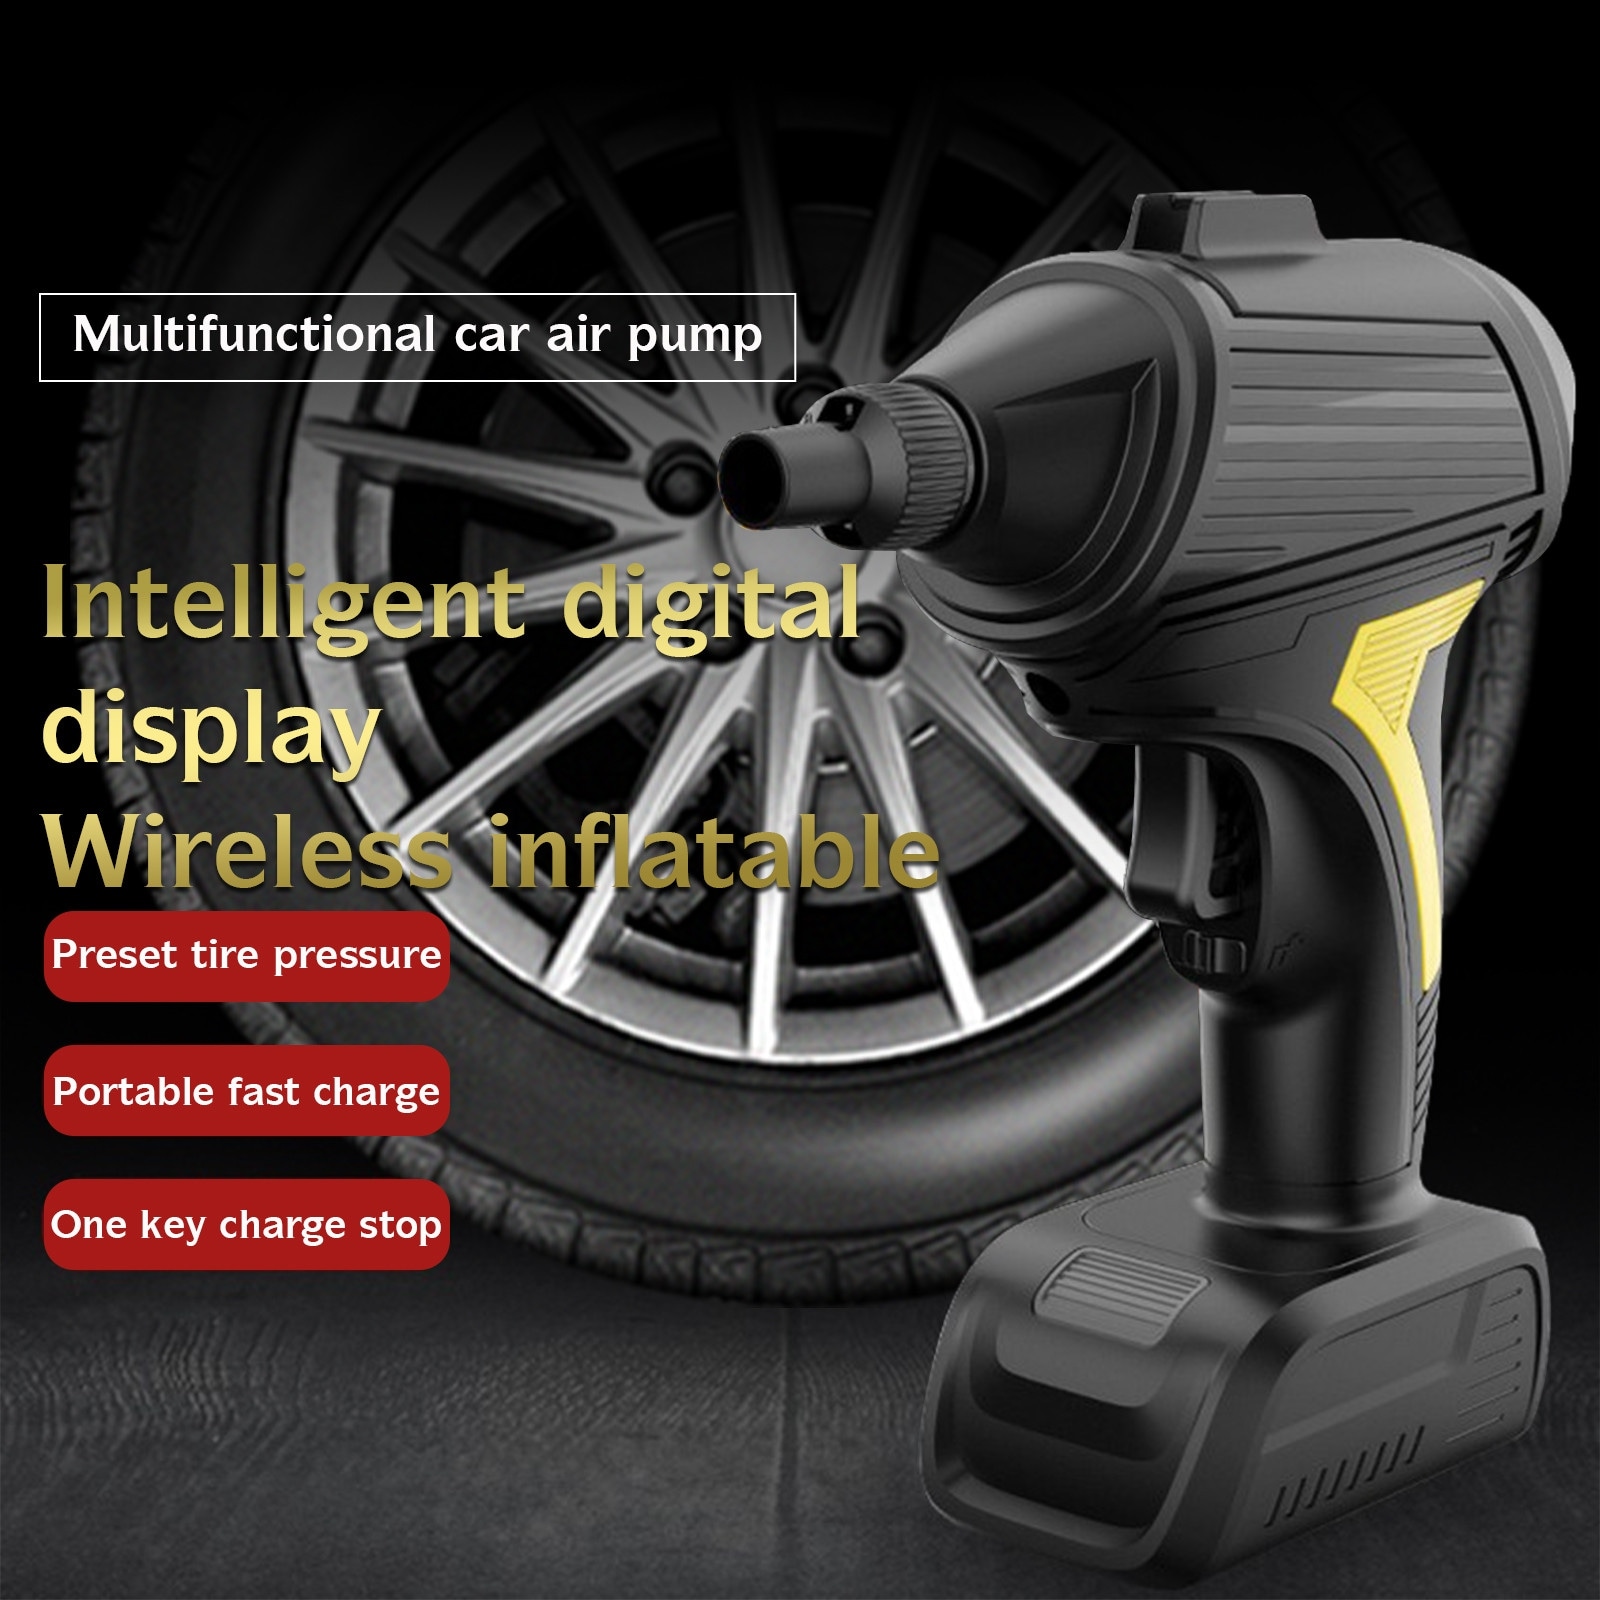 Multifunctional Intelligent Digital Display Wireless Air Pump